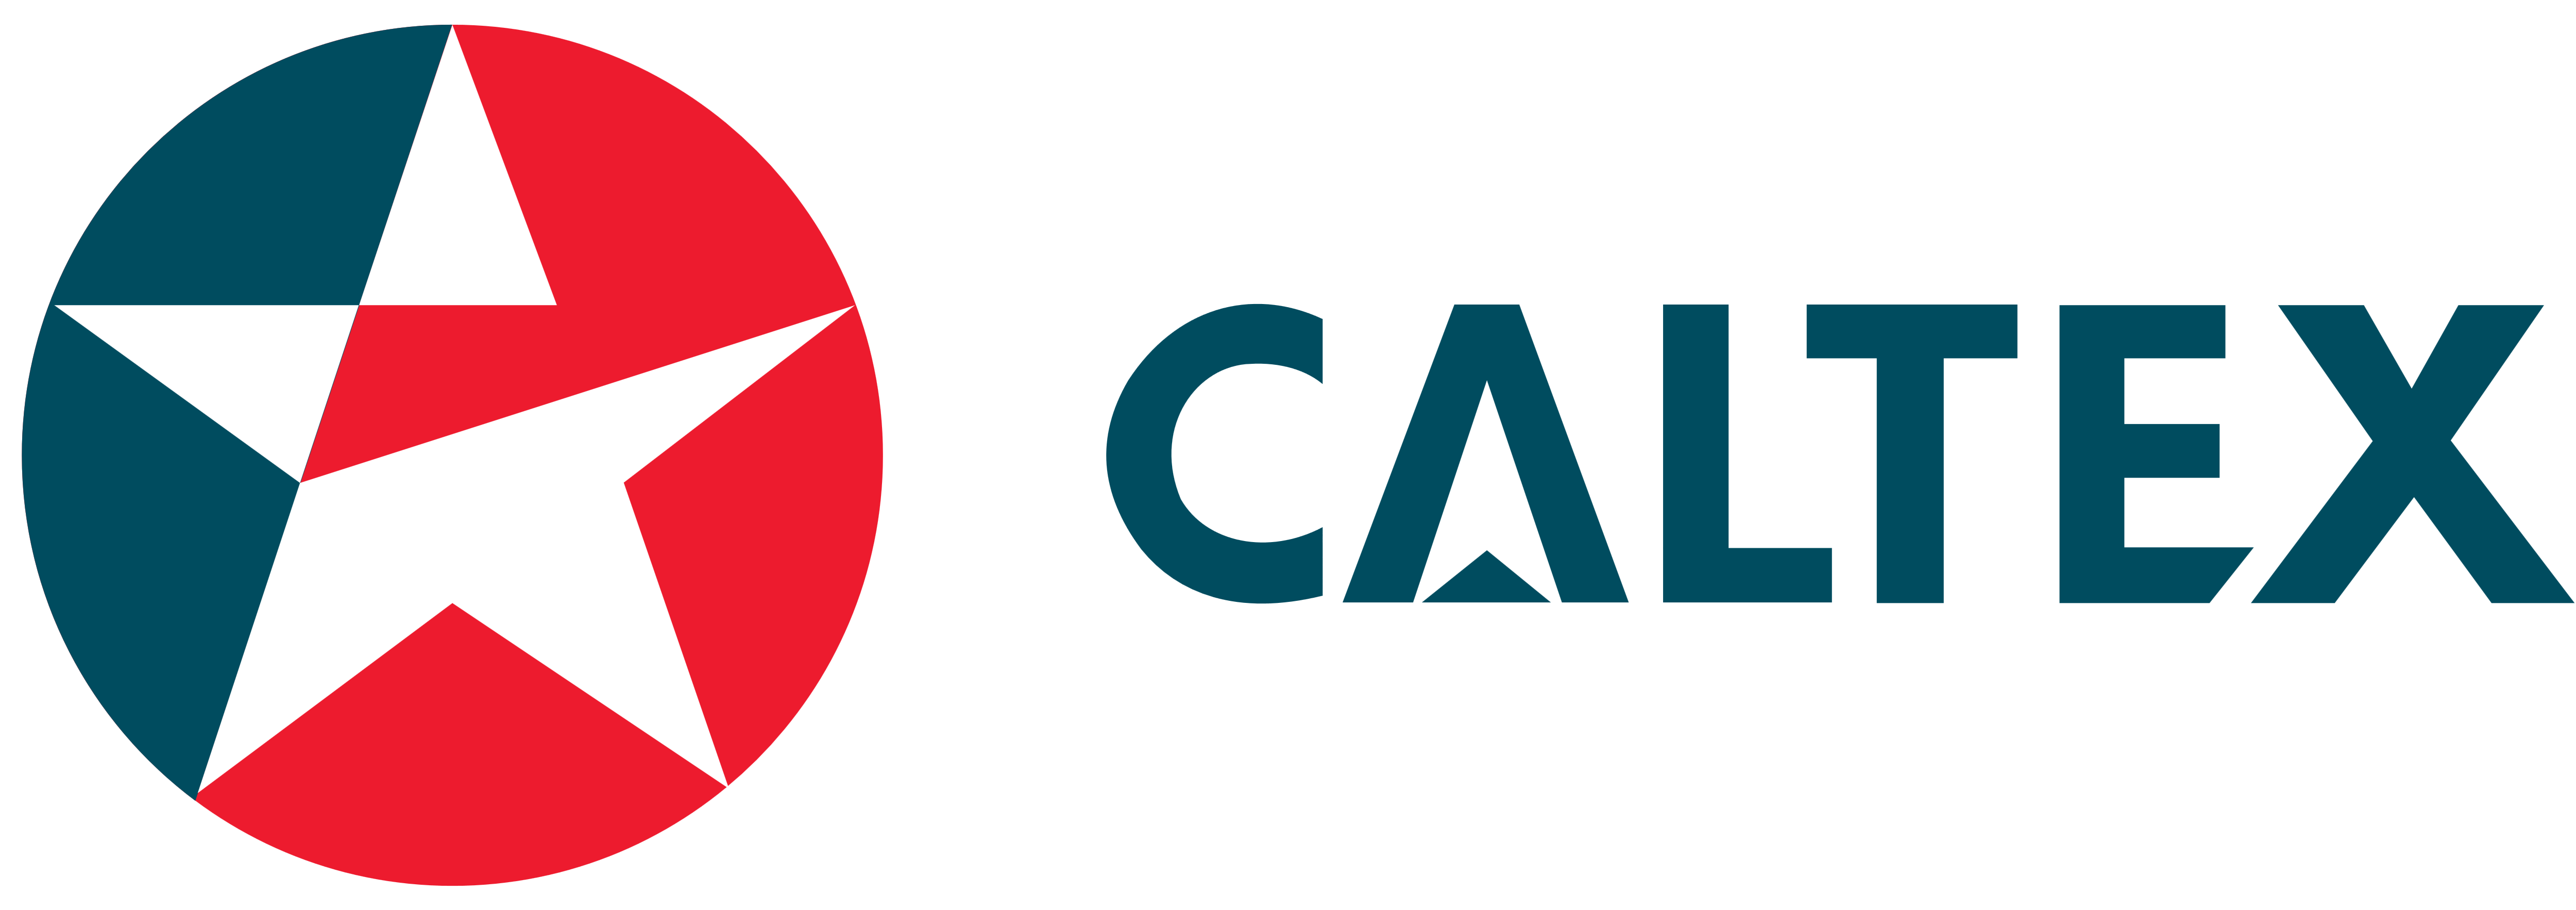 Caltex_logo_logotype